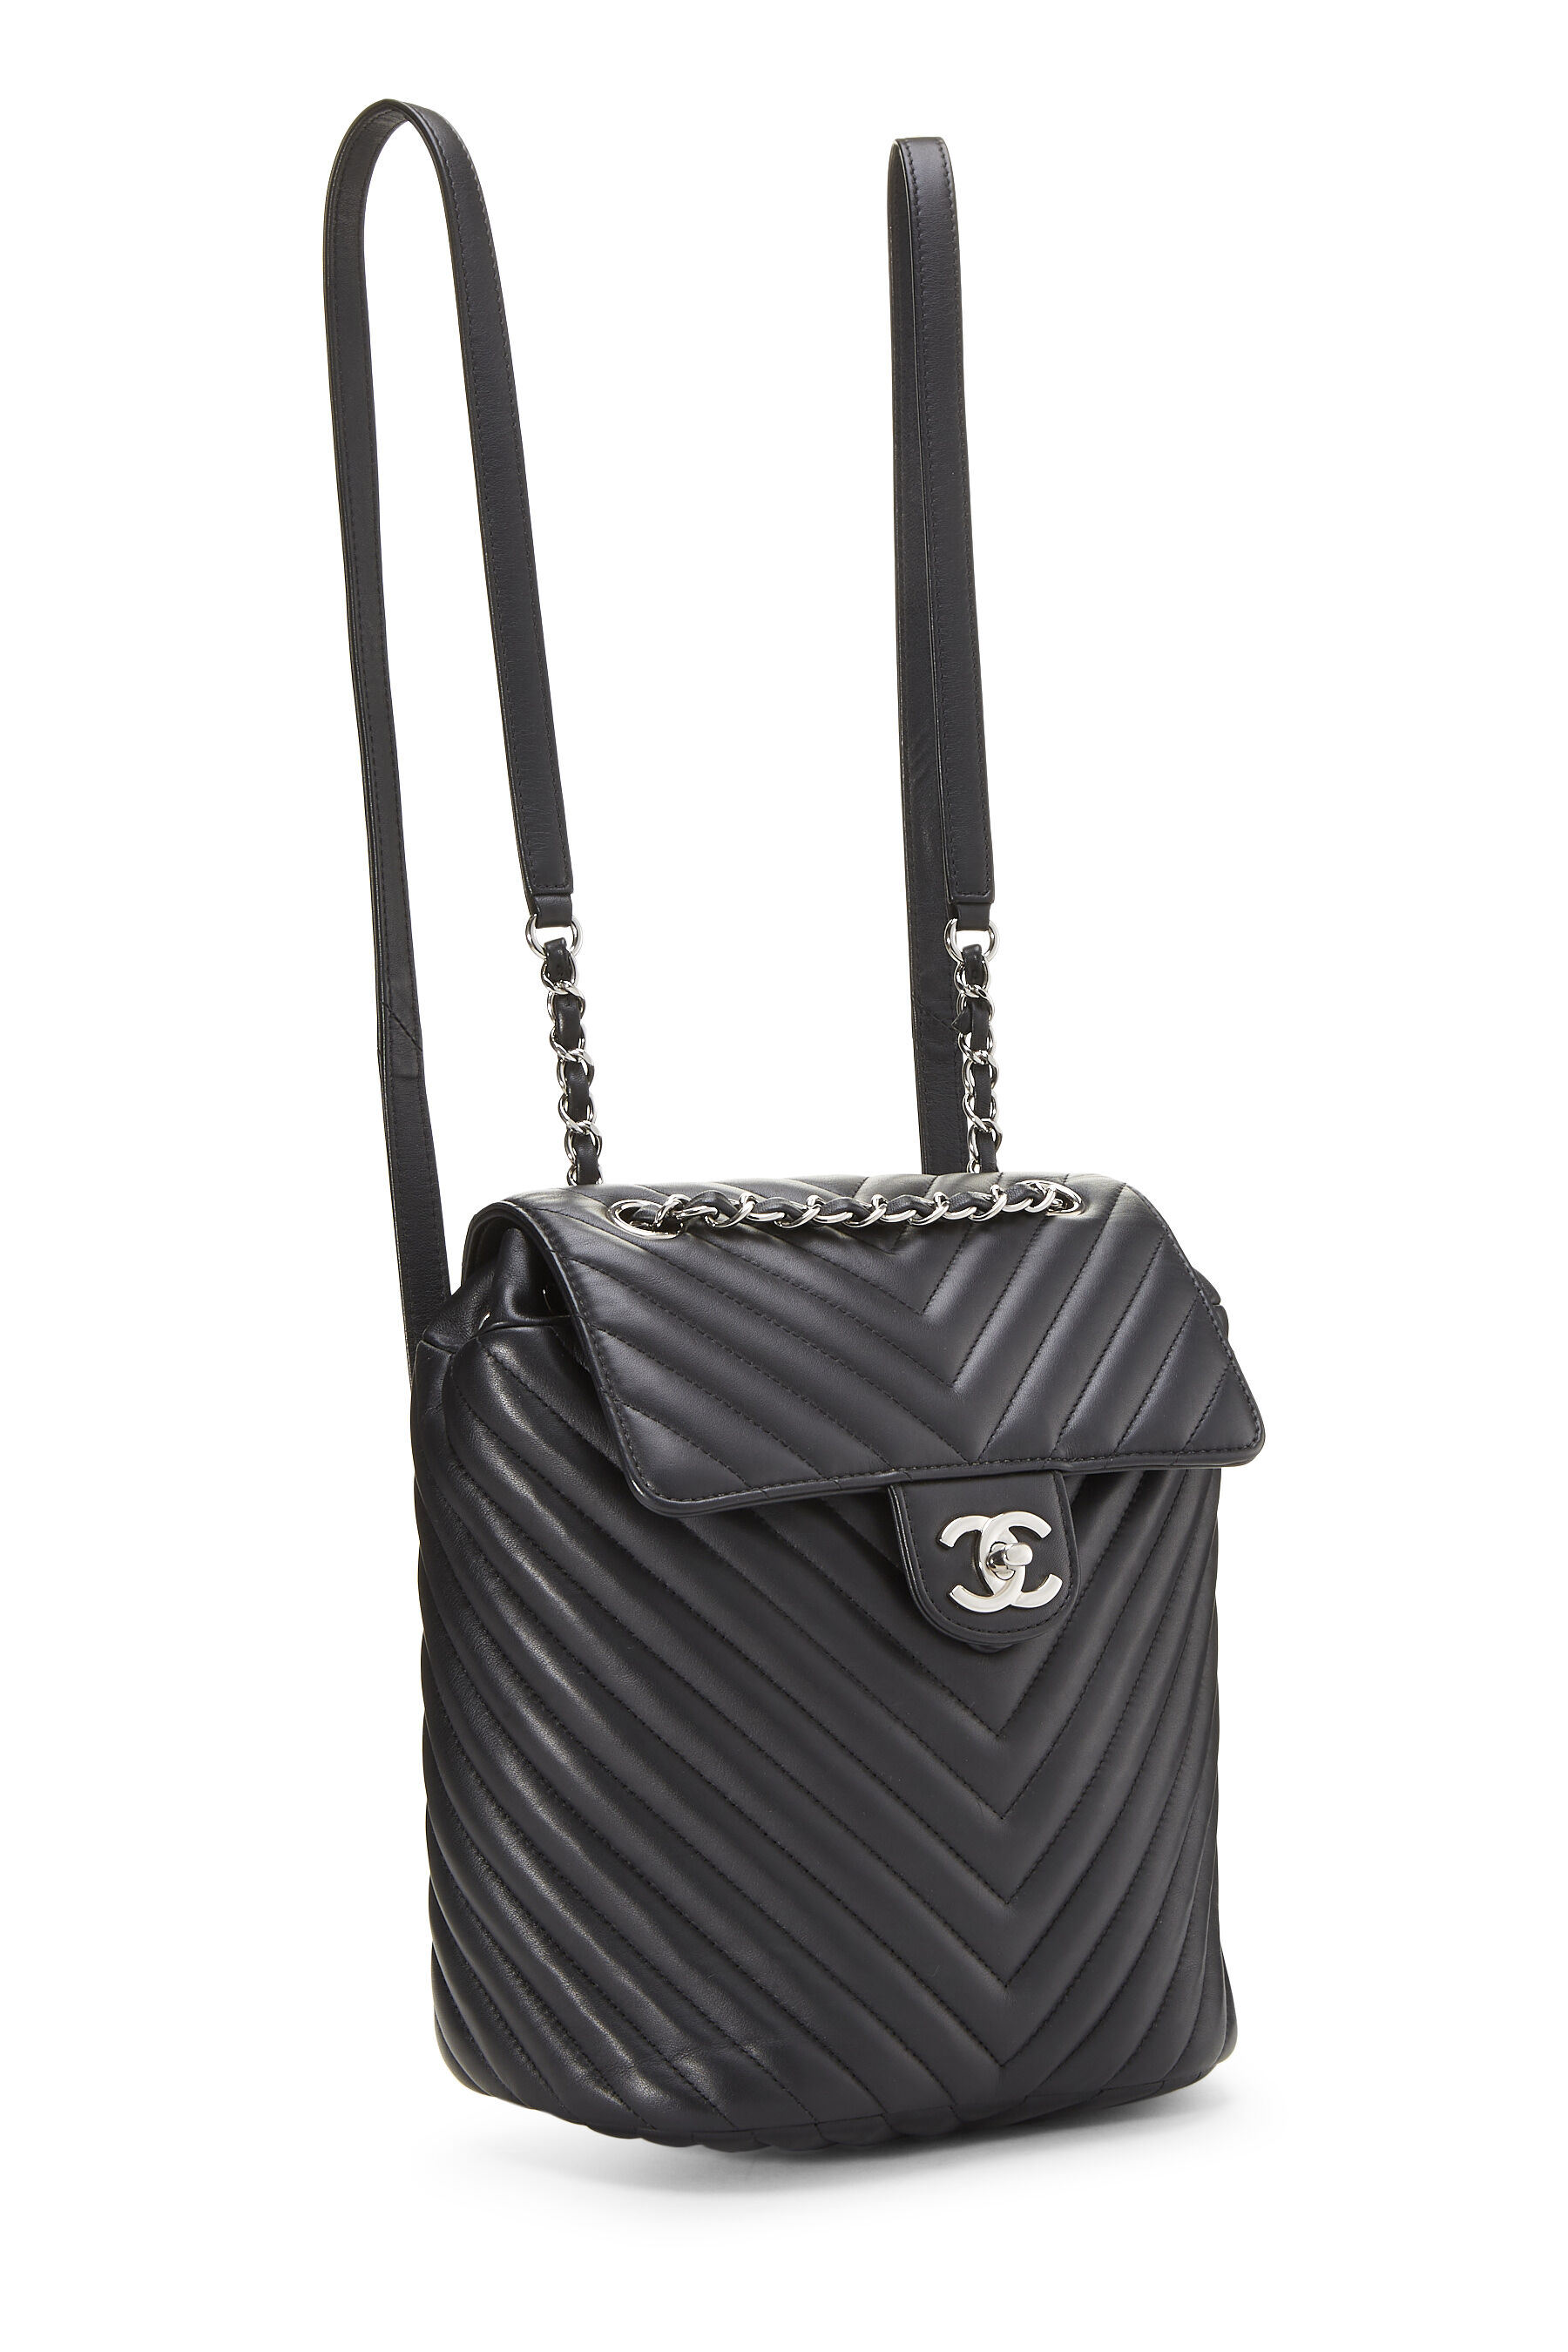 Chanel Black Chevron Lambskin Urban Spirit Backpack